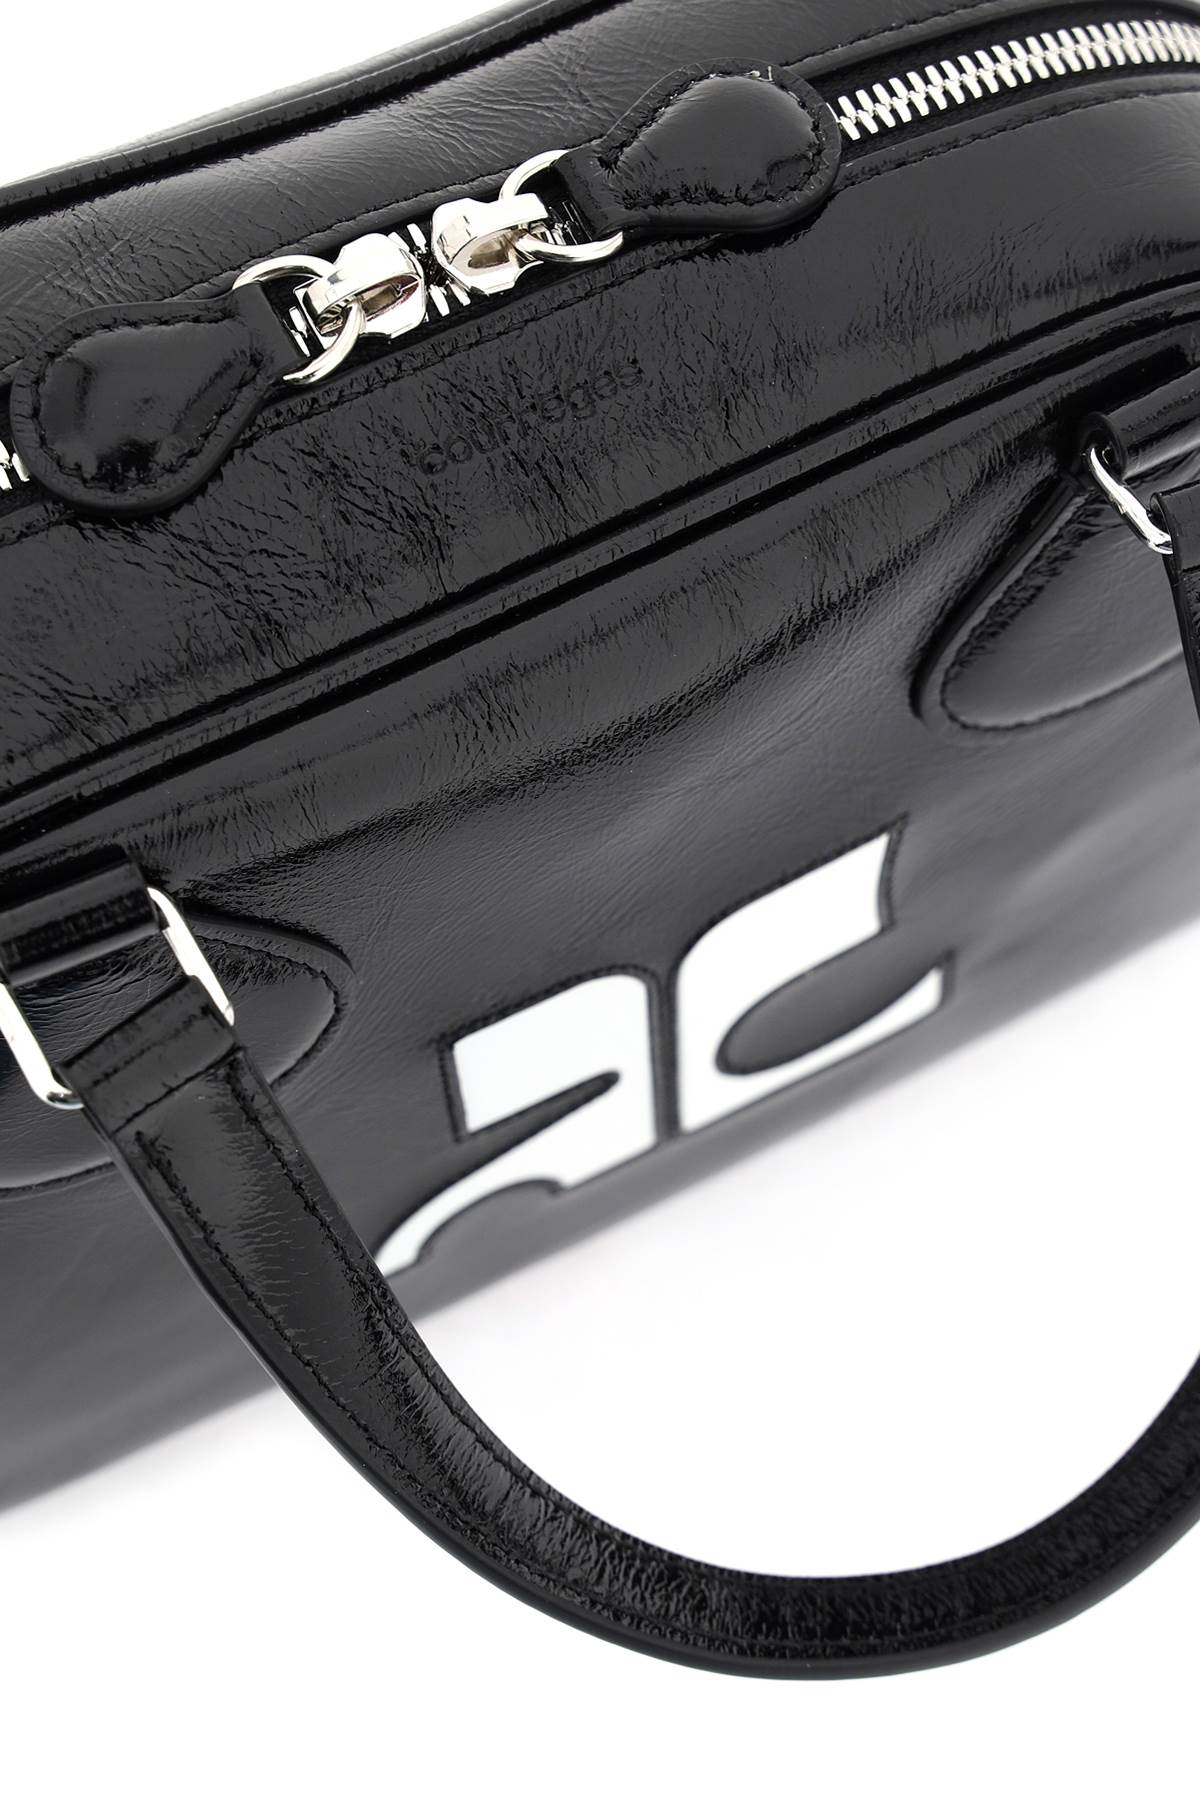 Shop Courrèges The Luxurious Black Box Handbag For Modern Women